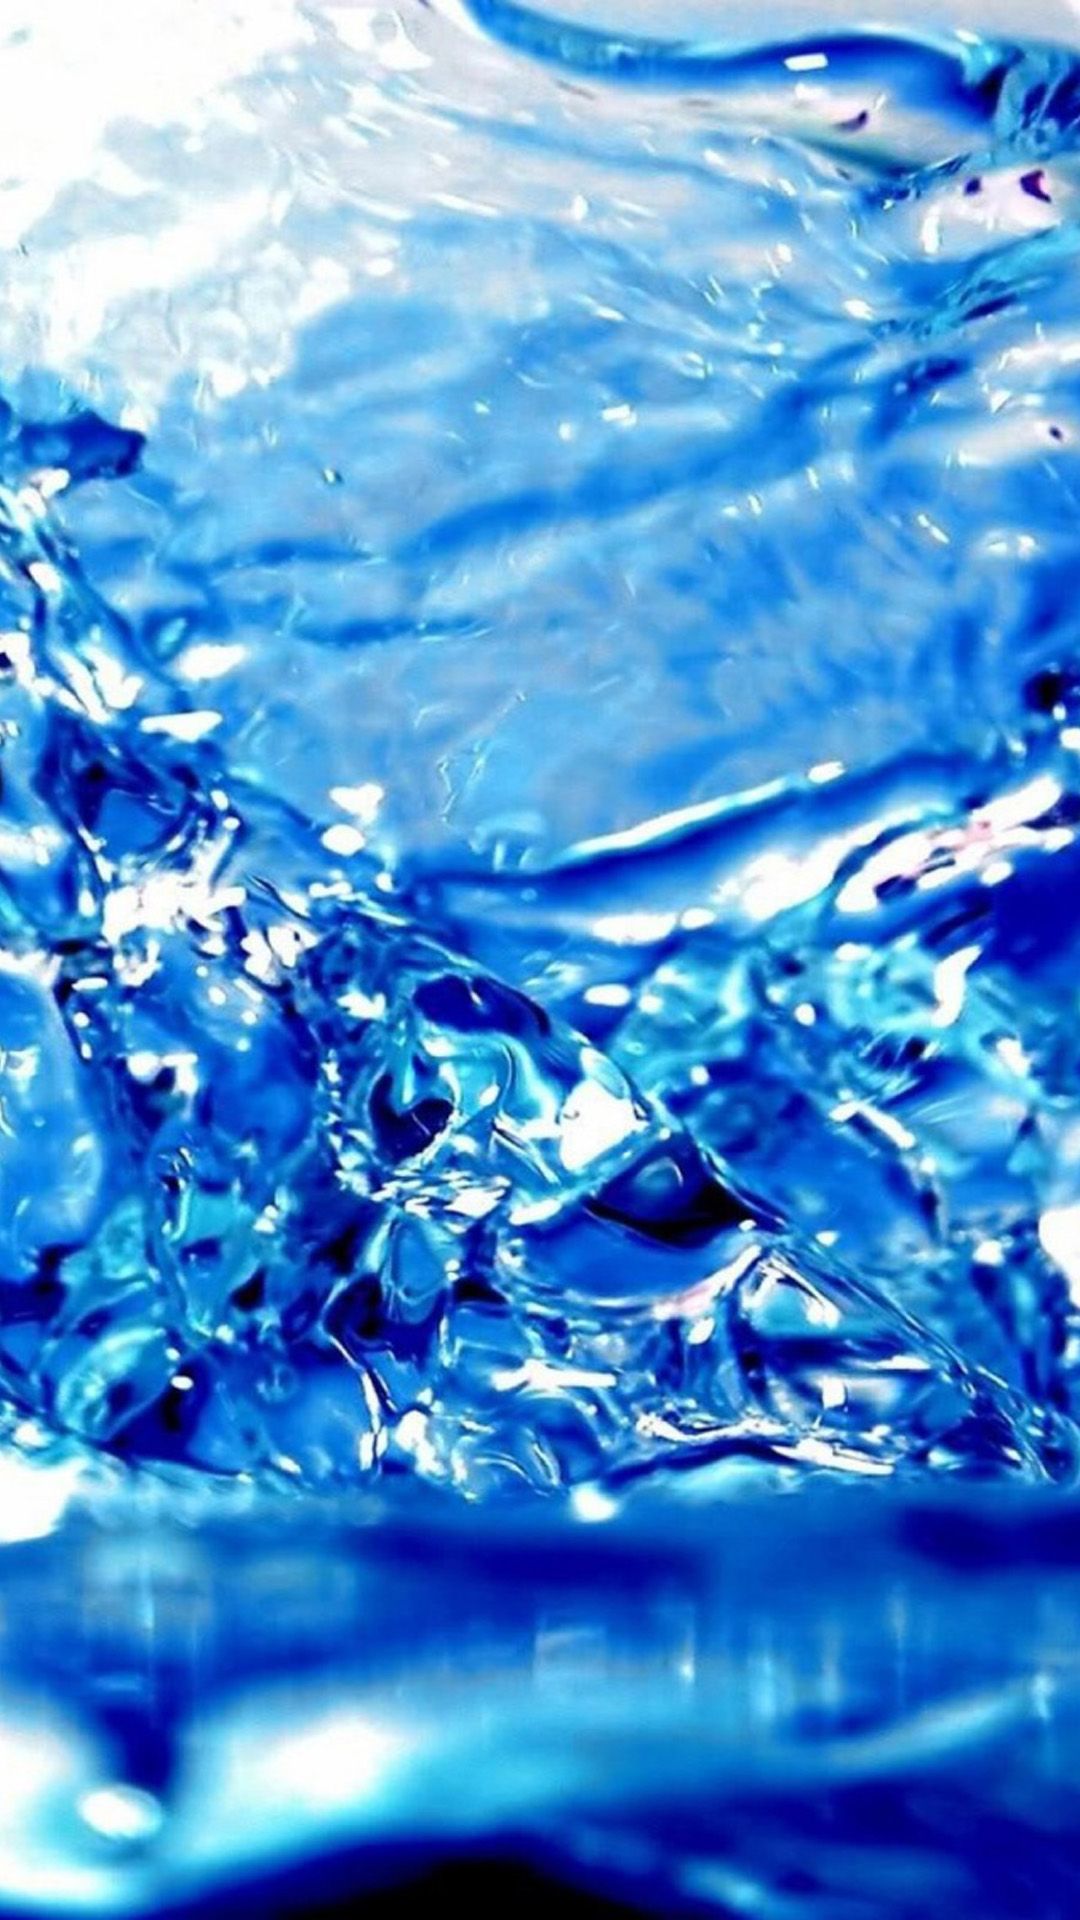 Blue Water Splash Background iPhone Plus Wallpaper